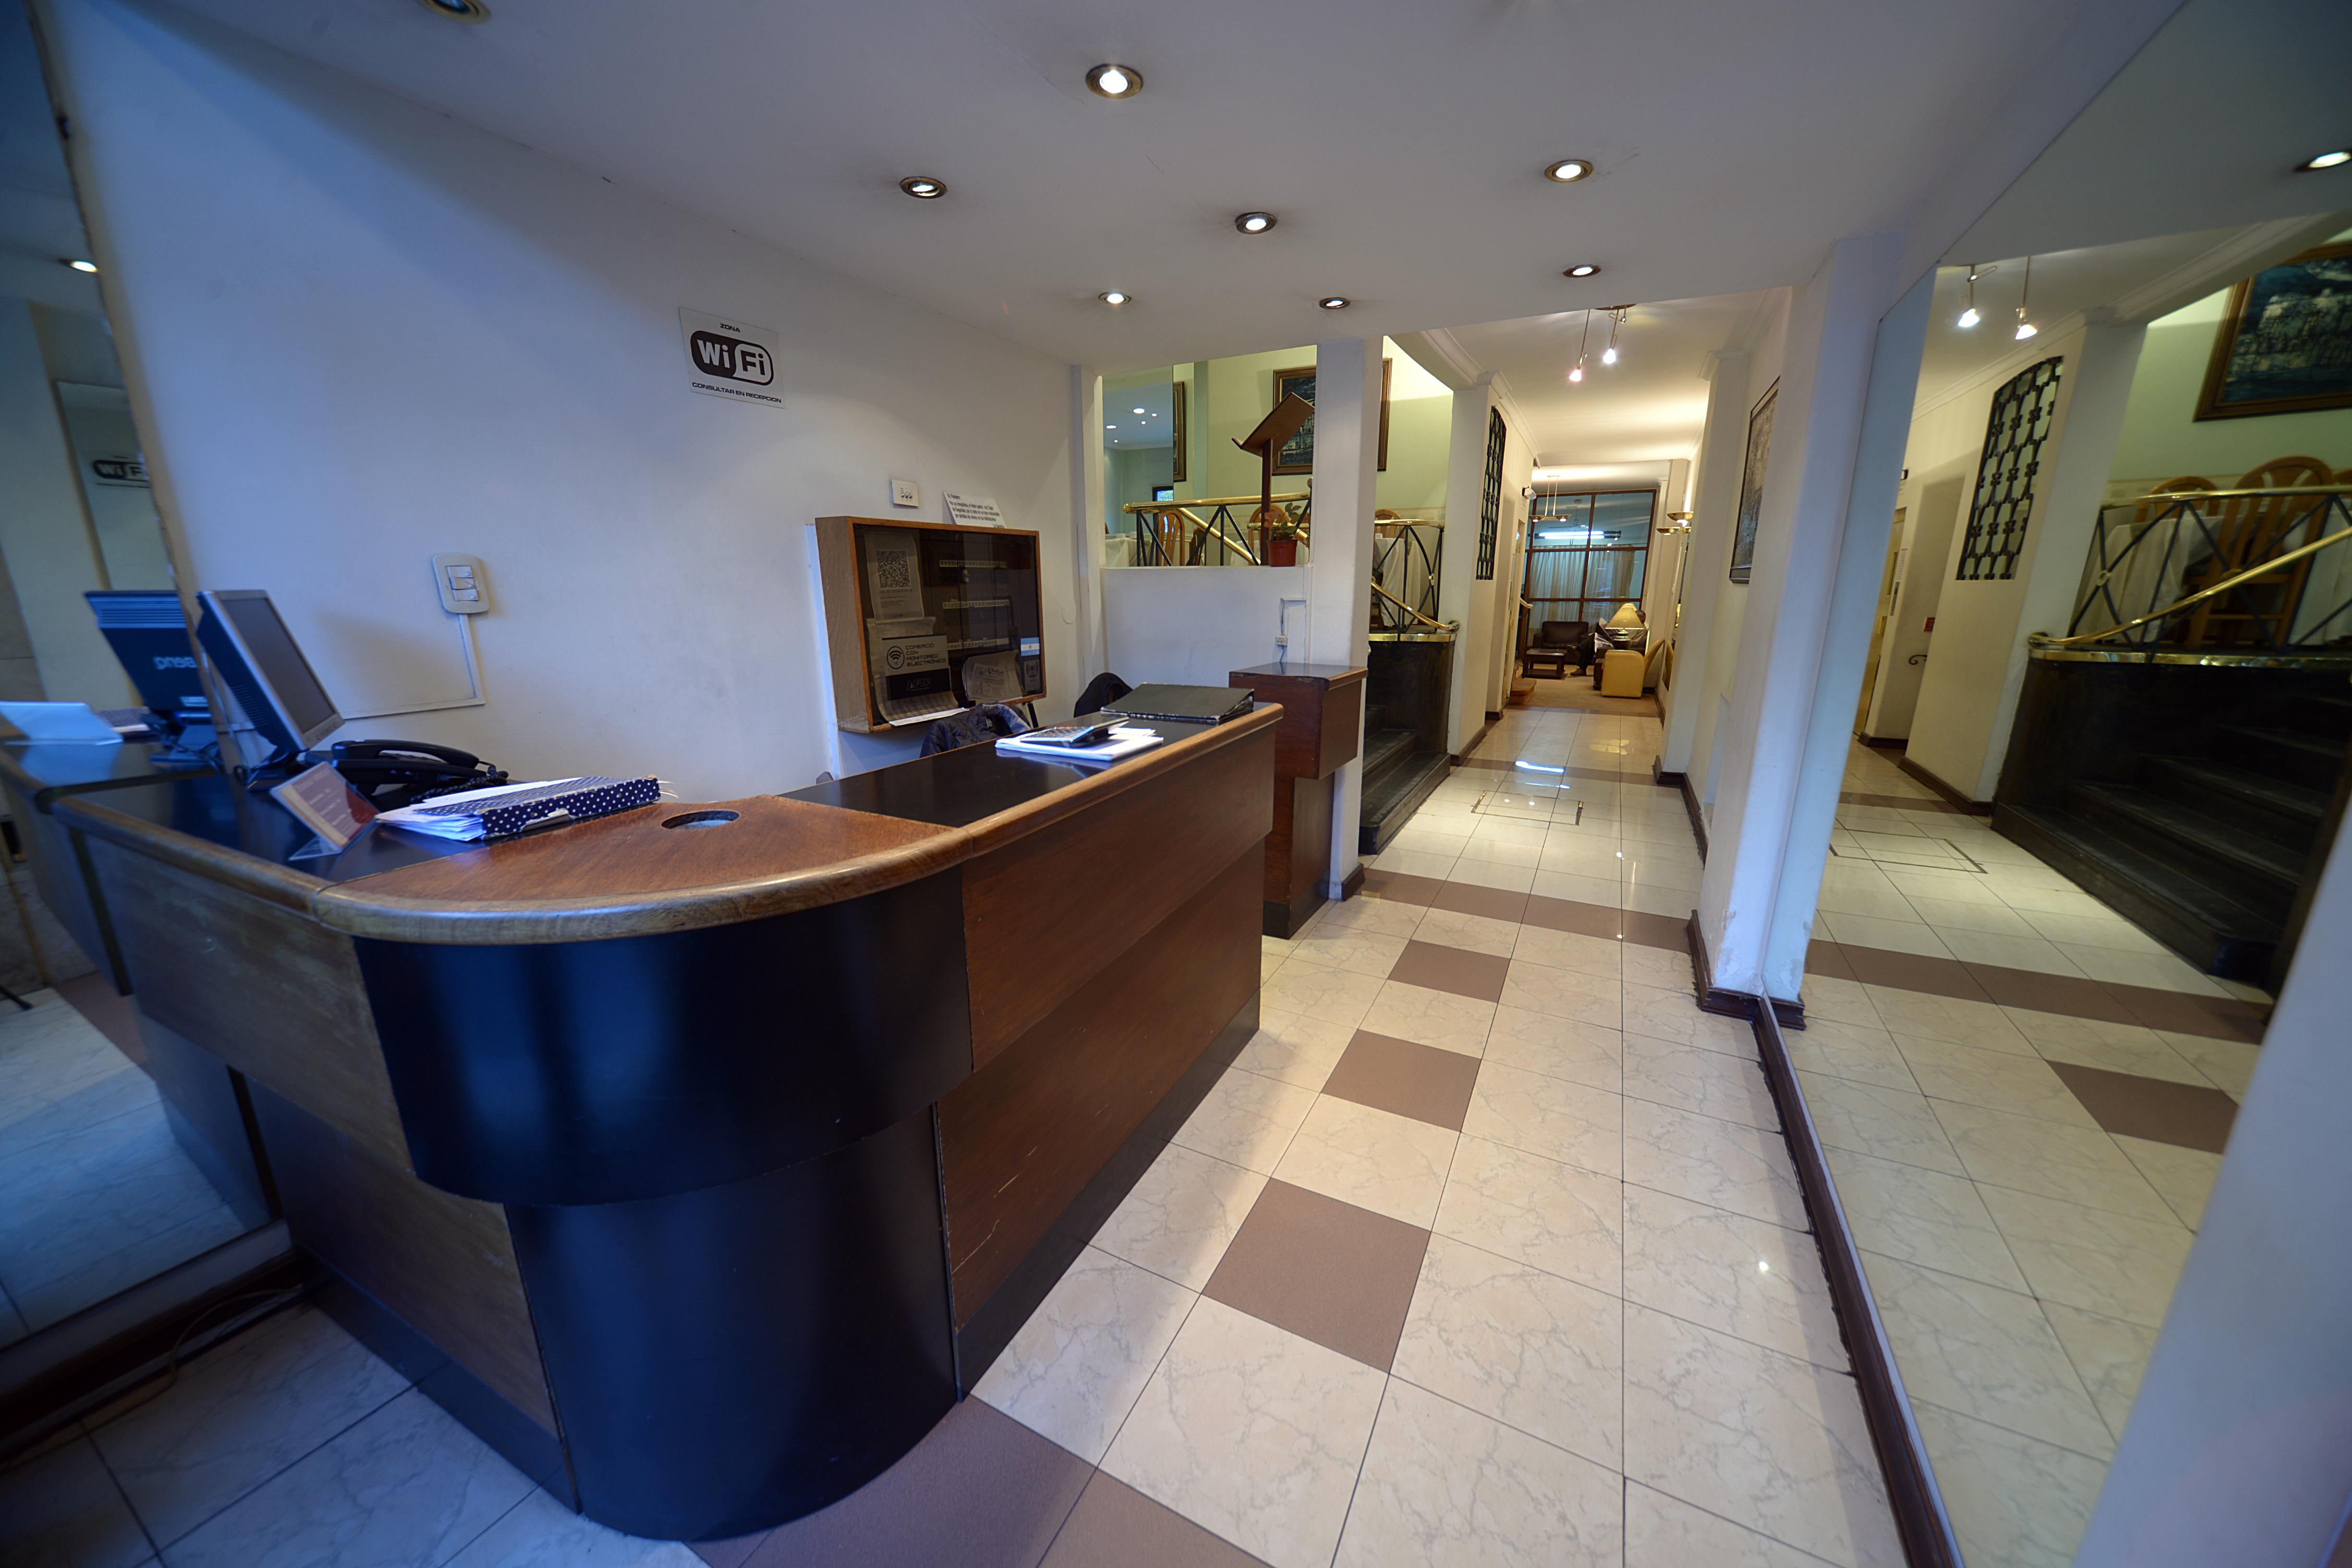 Hotel Ariosto Mendoza Extérieur photo